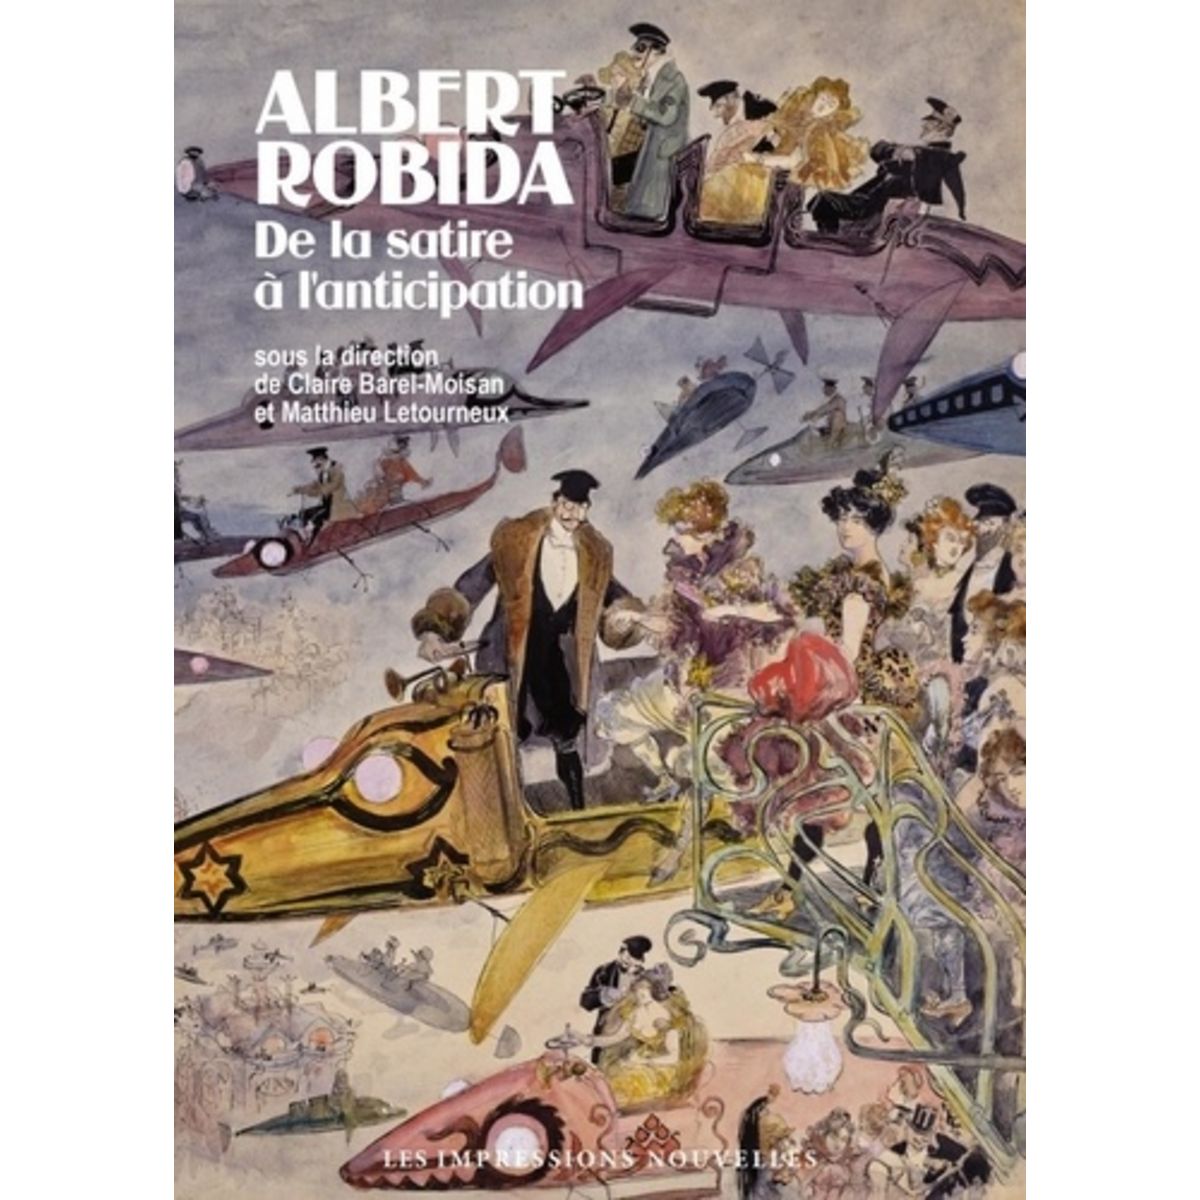  ALBERT ROBIDA. DE LA SATIRE A L'ANTICIPATION, Barel-Moisan Claire